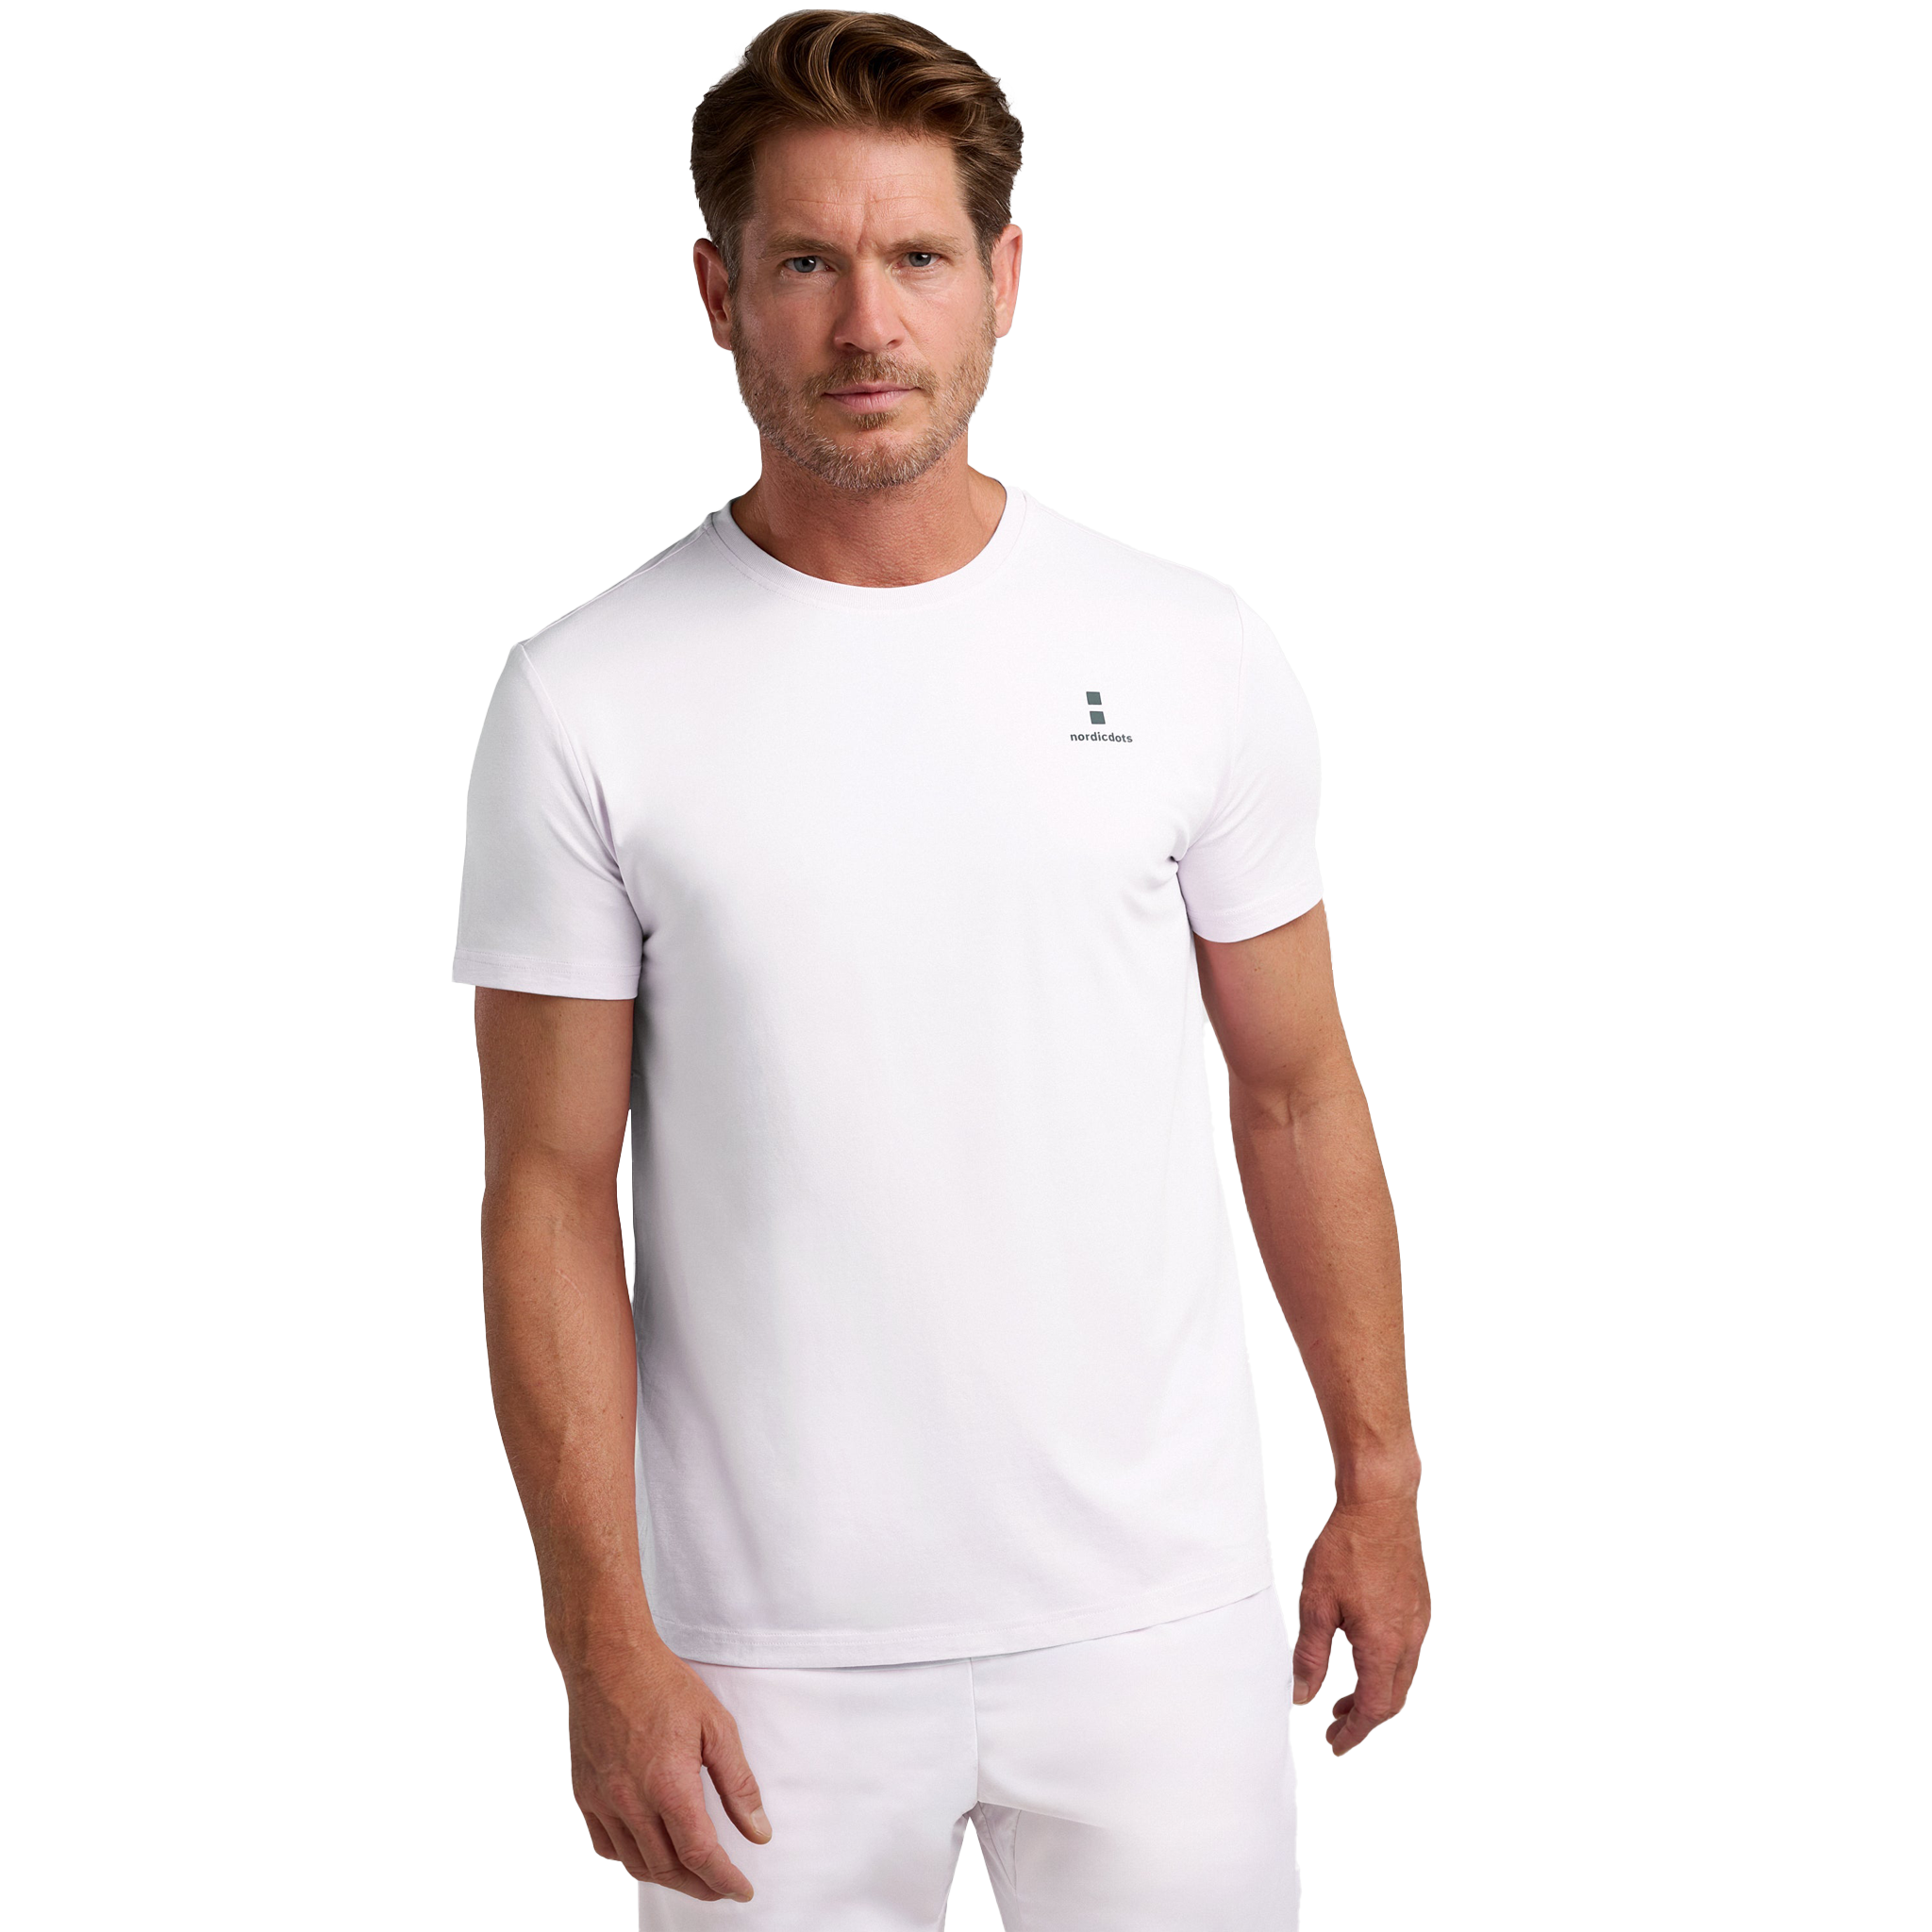 nordicdots Modal Comfort T-Shirt White